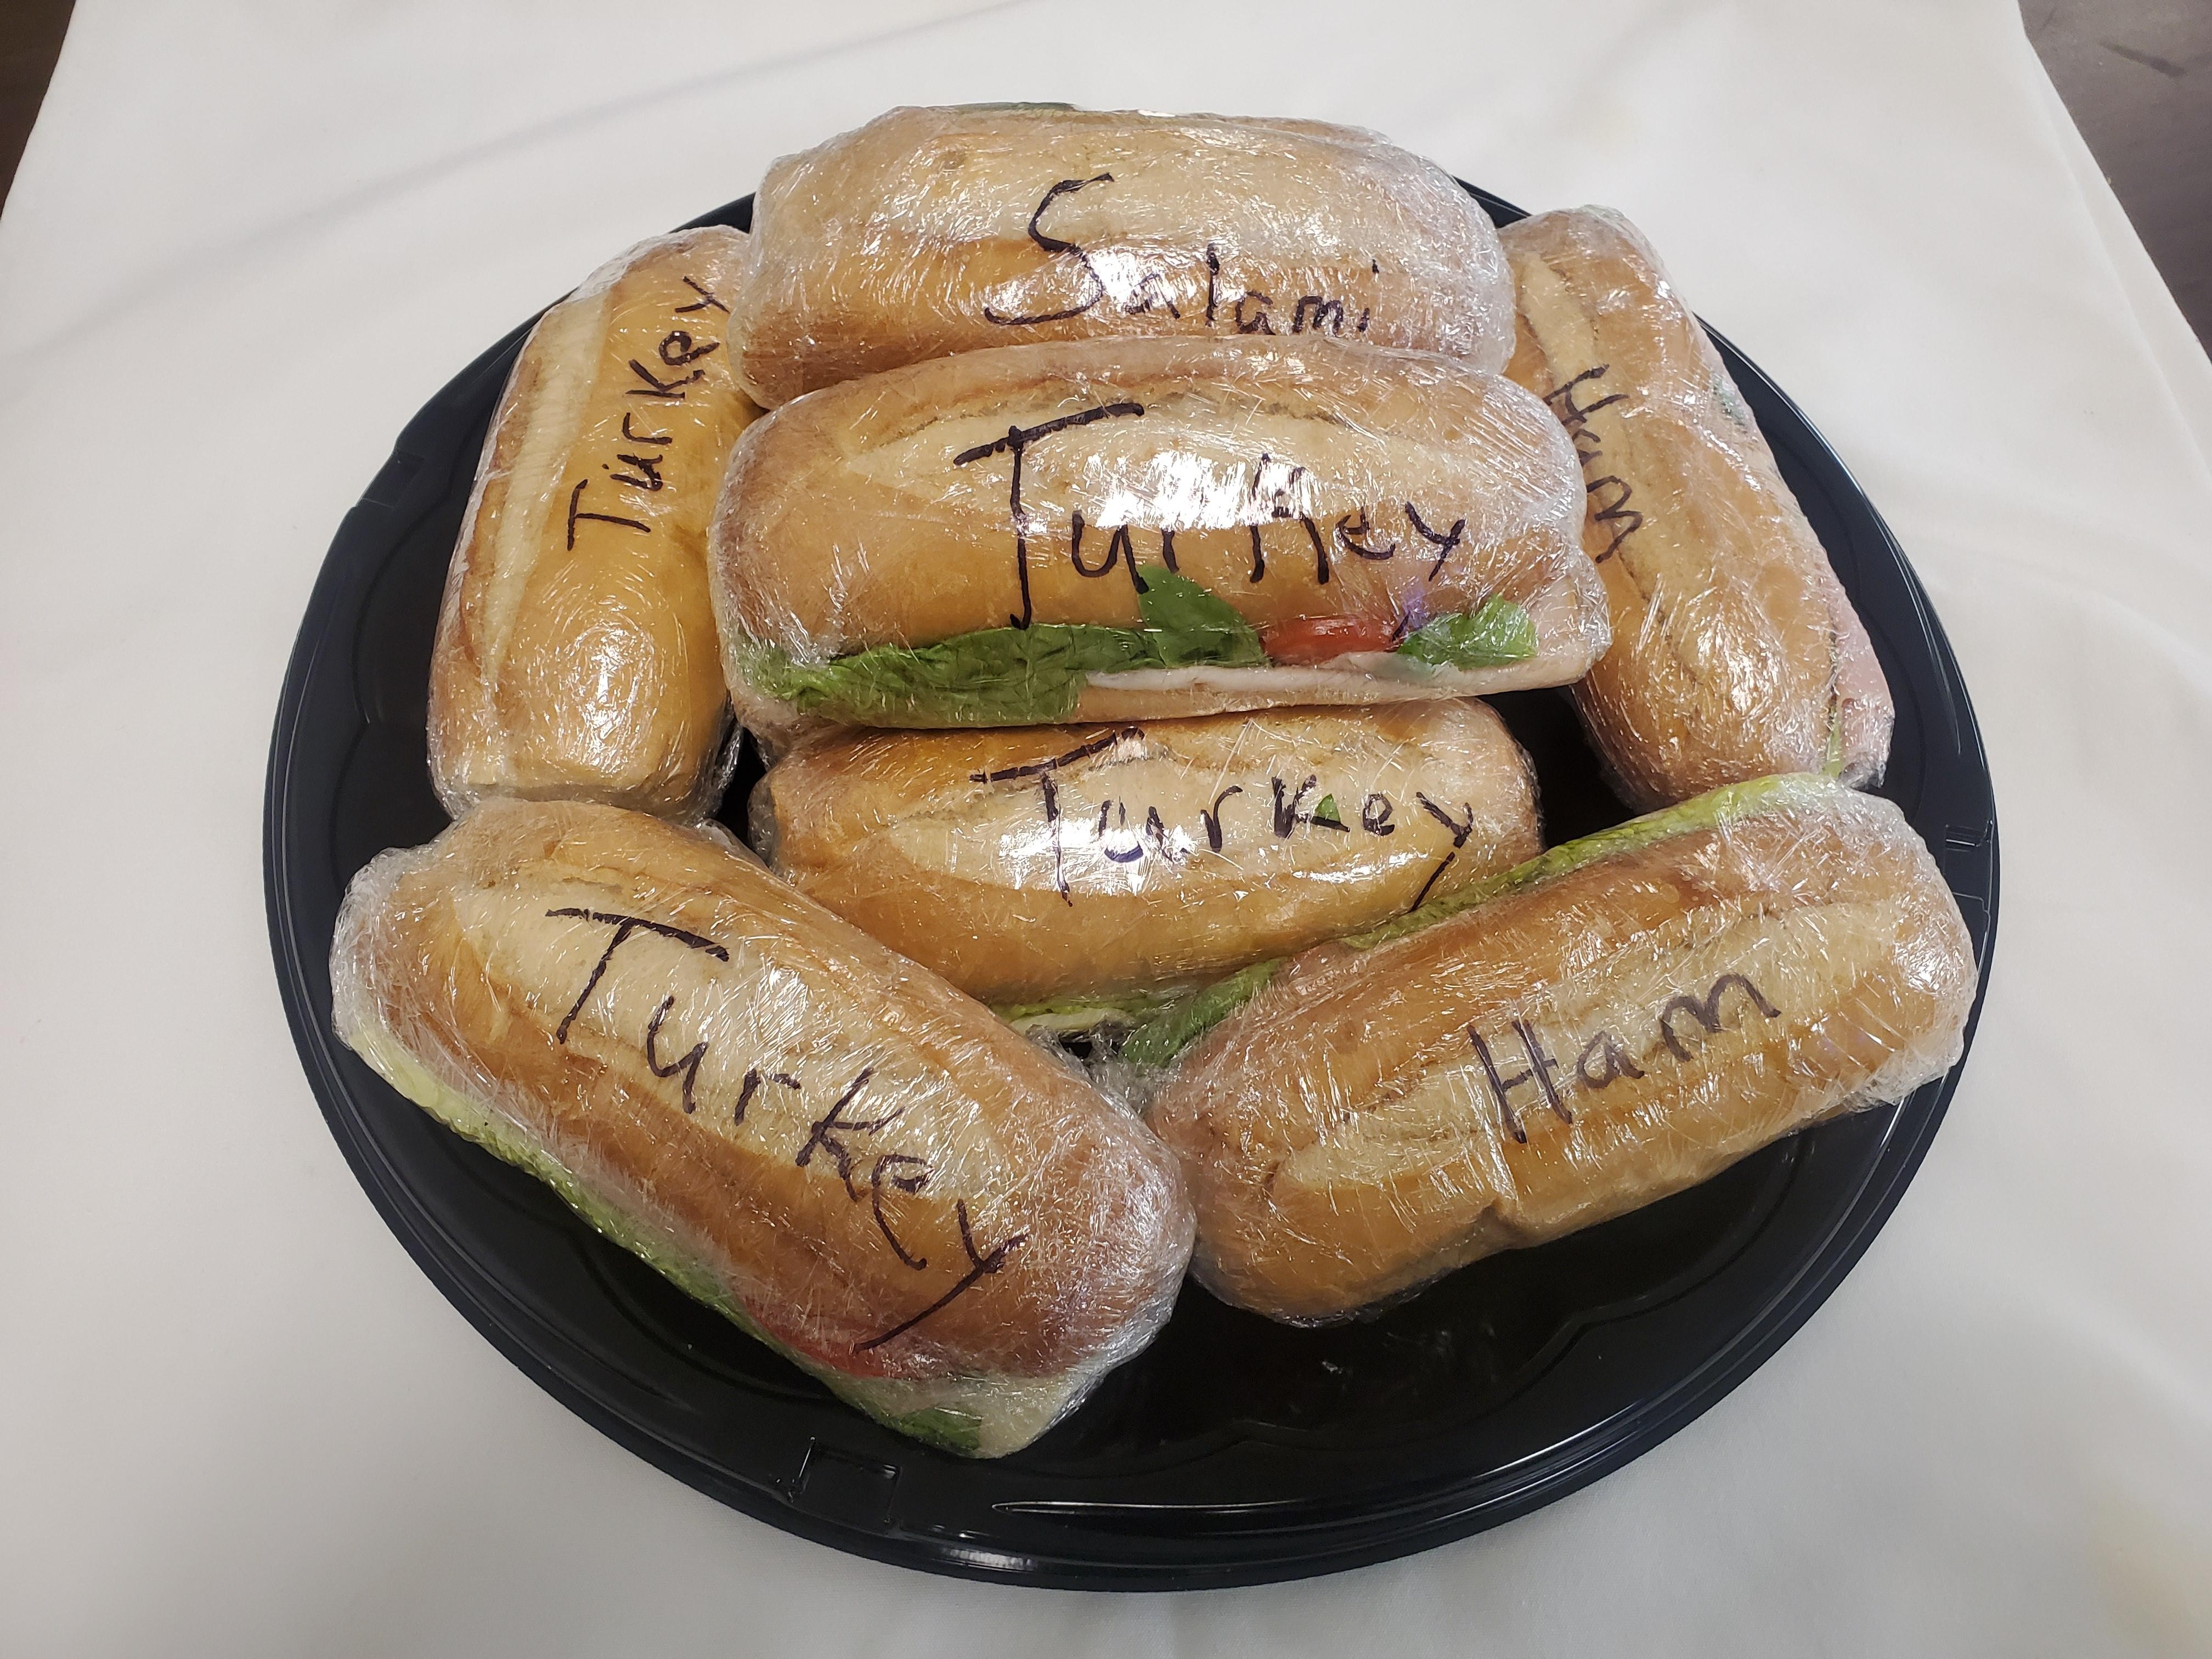 Assorted Sub Sandwich Platter - 10 Subs